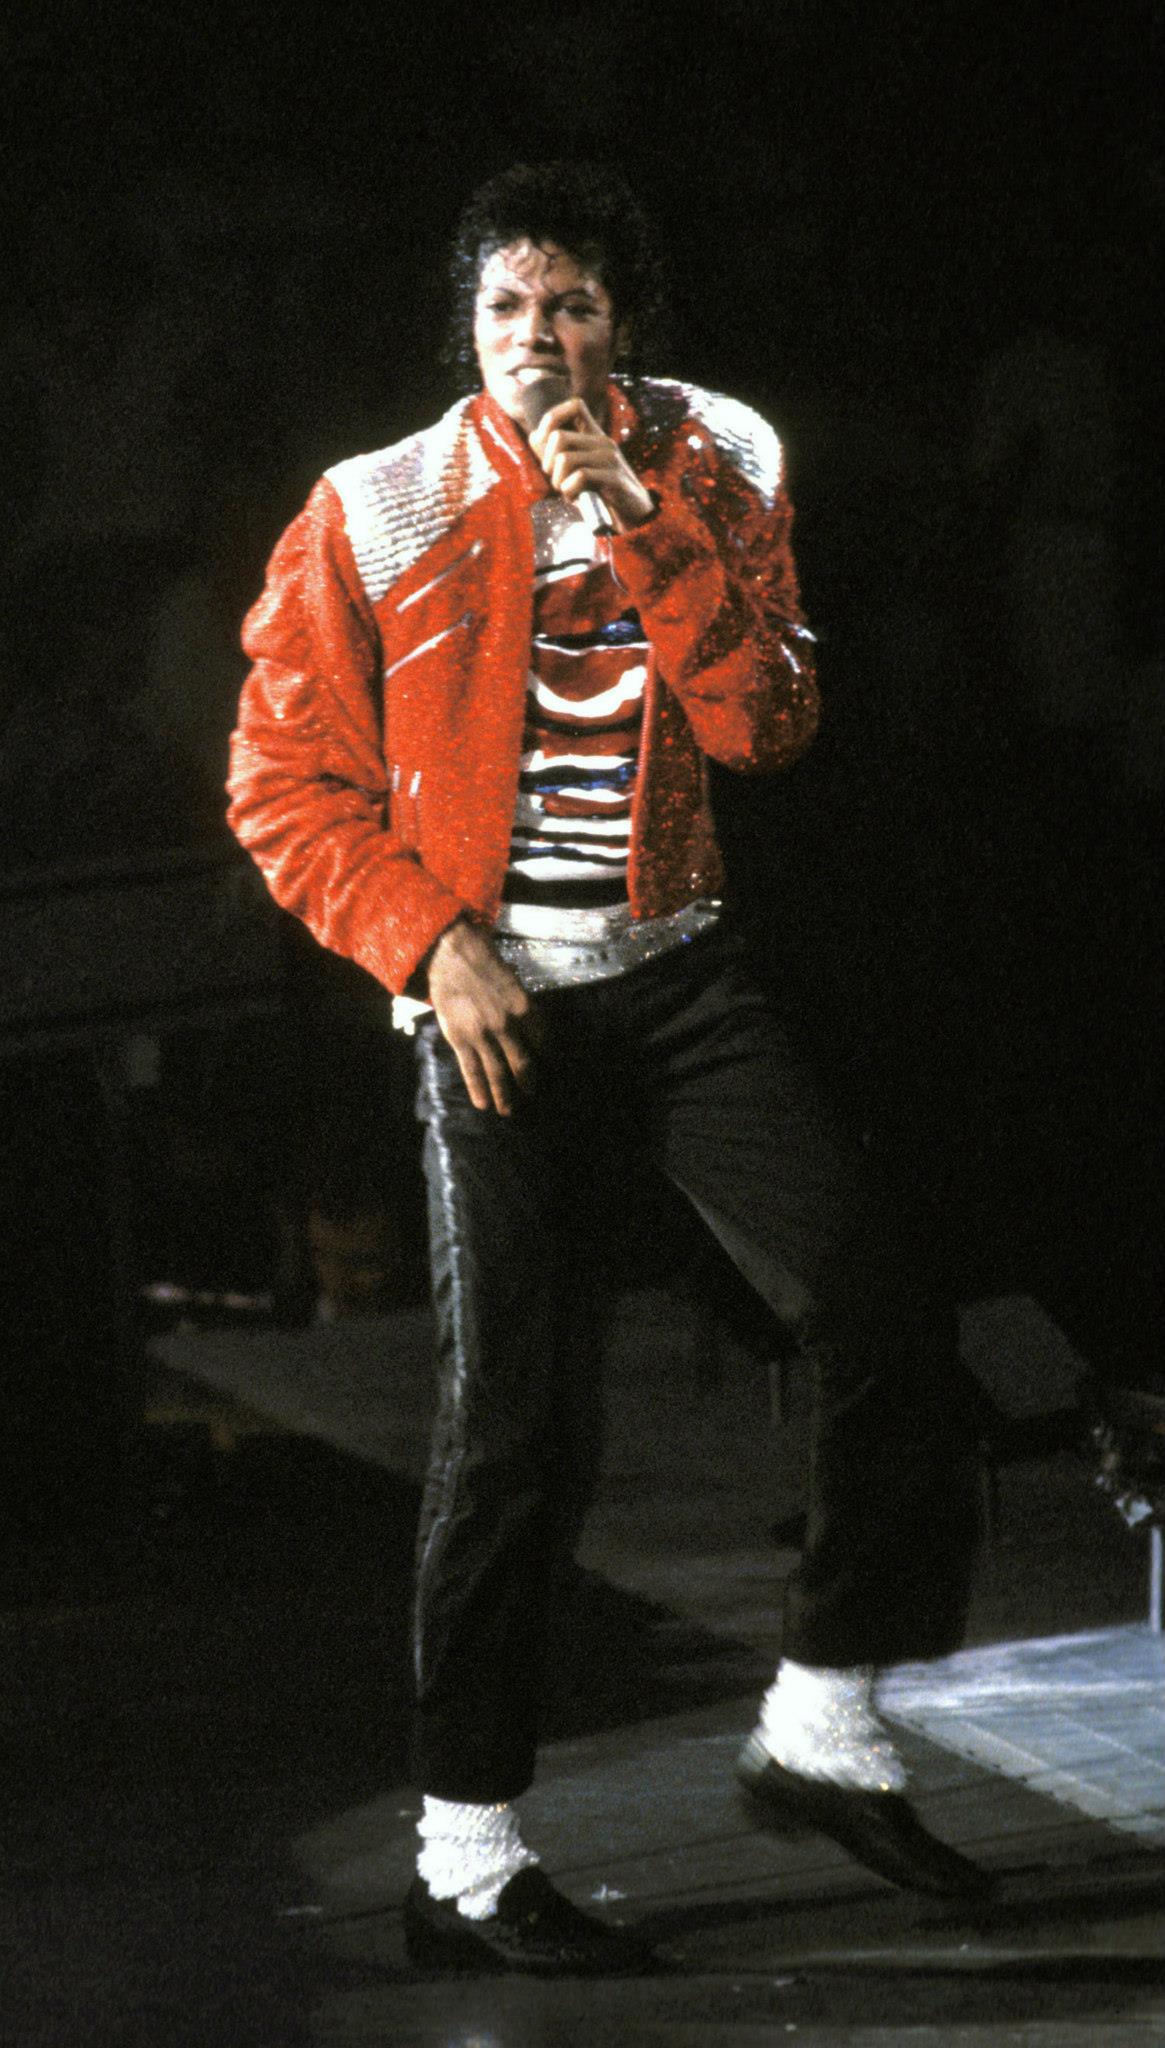 MJ on Twitter: "📸 | Michael Jackson, Beat It, Live Victory 1984 https://t.co/ehp0vQ3zXB" / Twitter